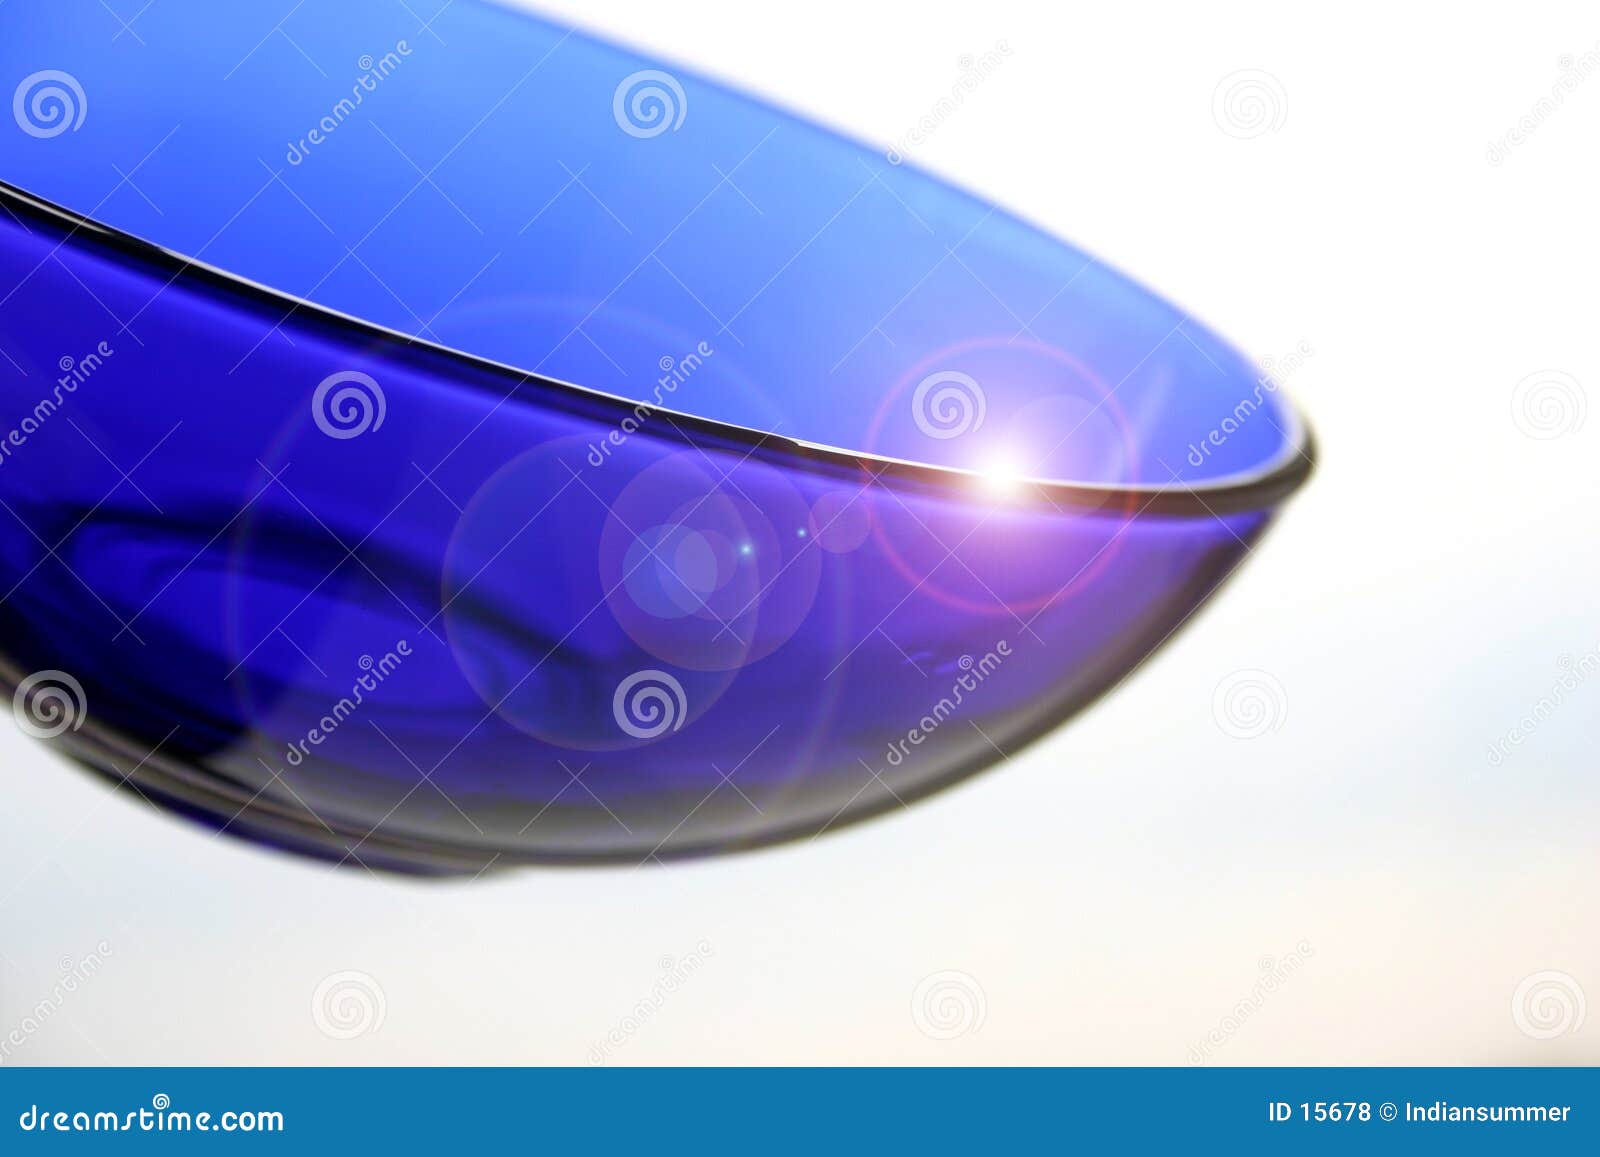 blue vitreous plate